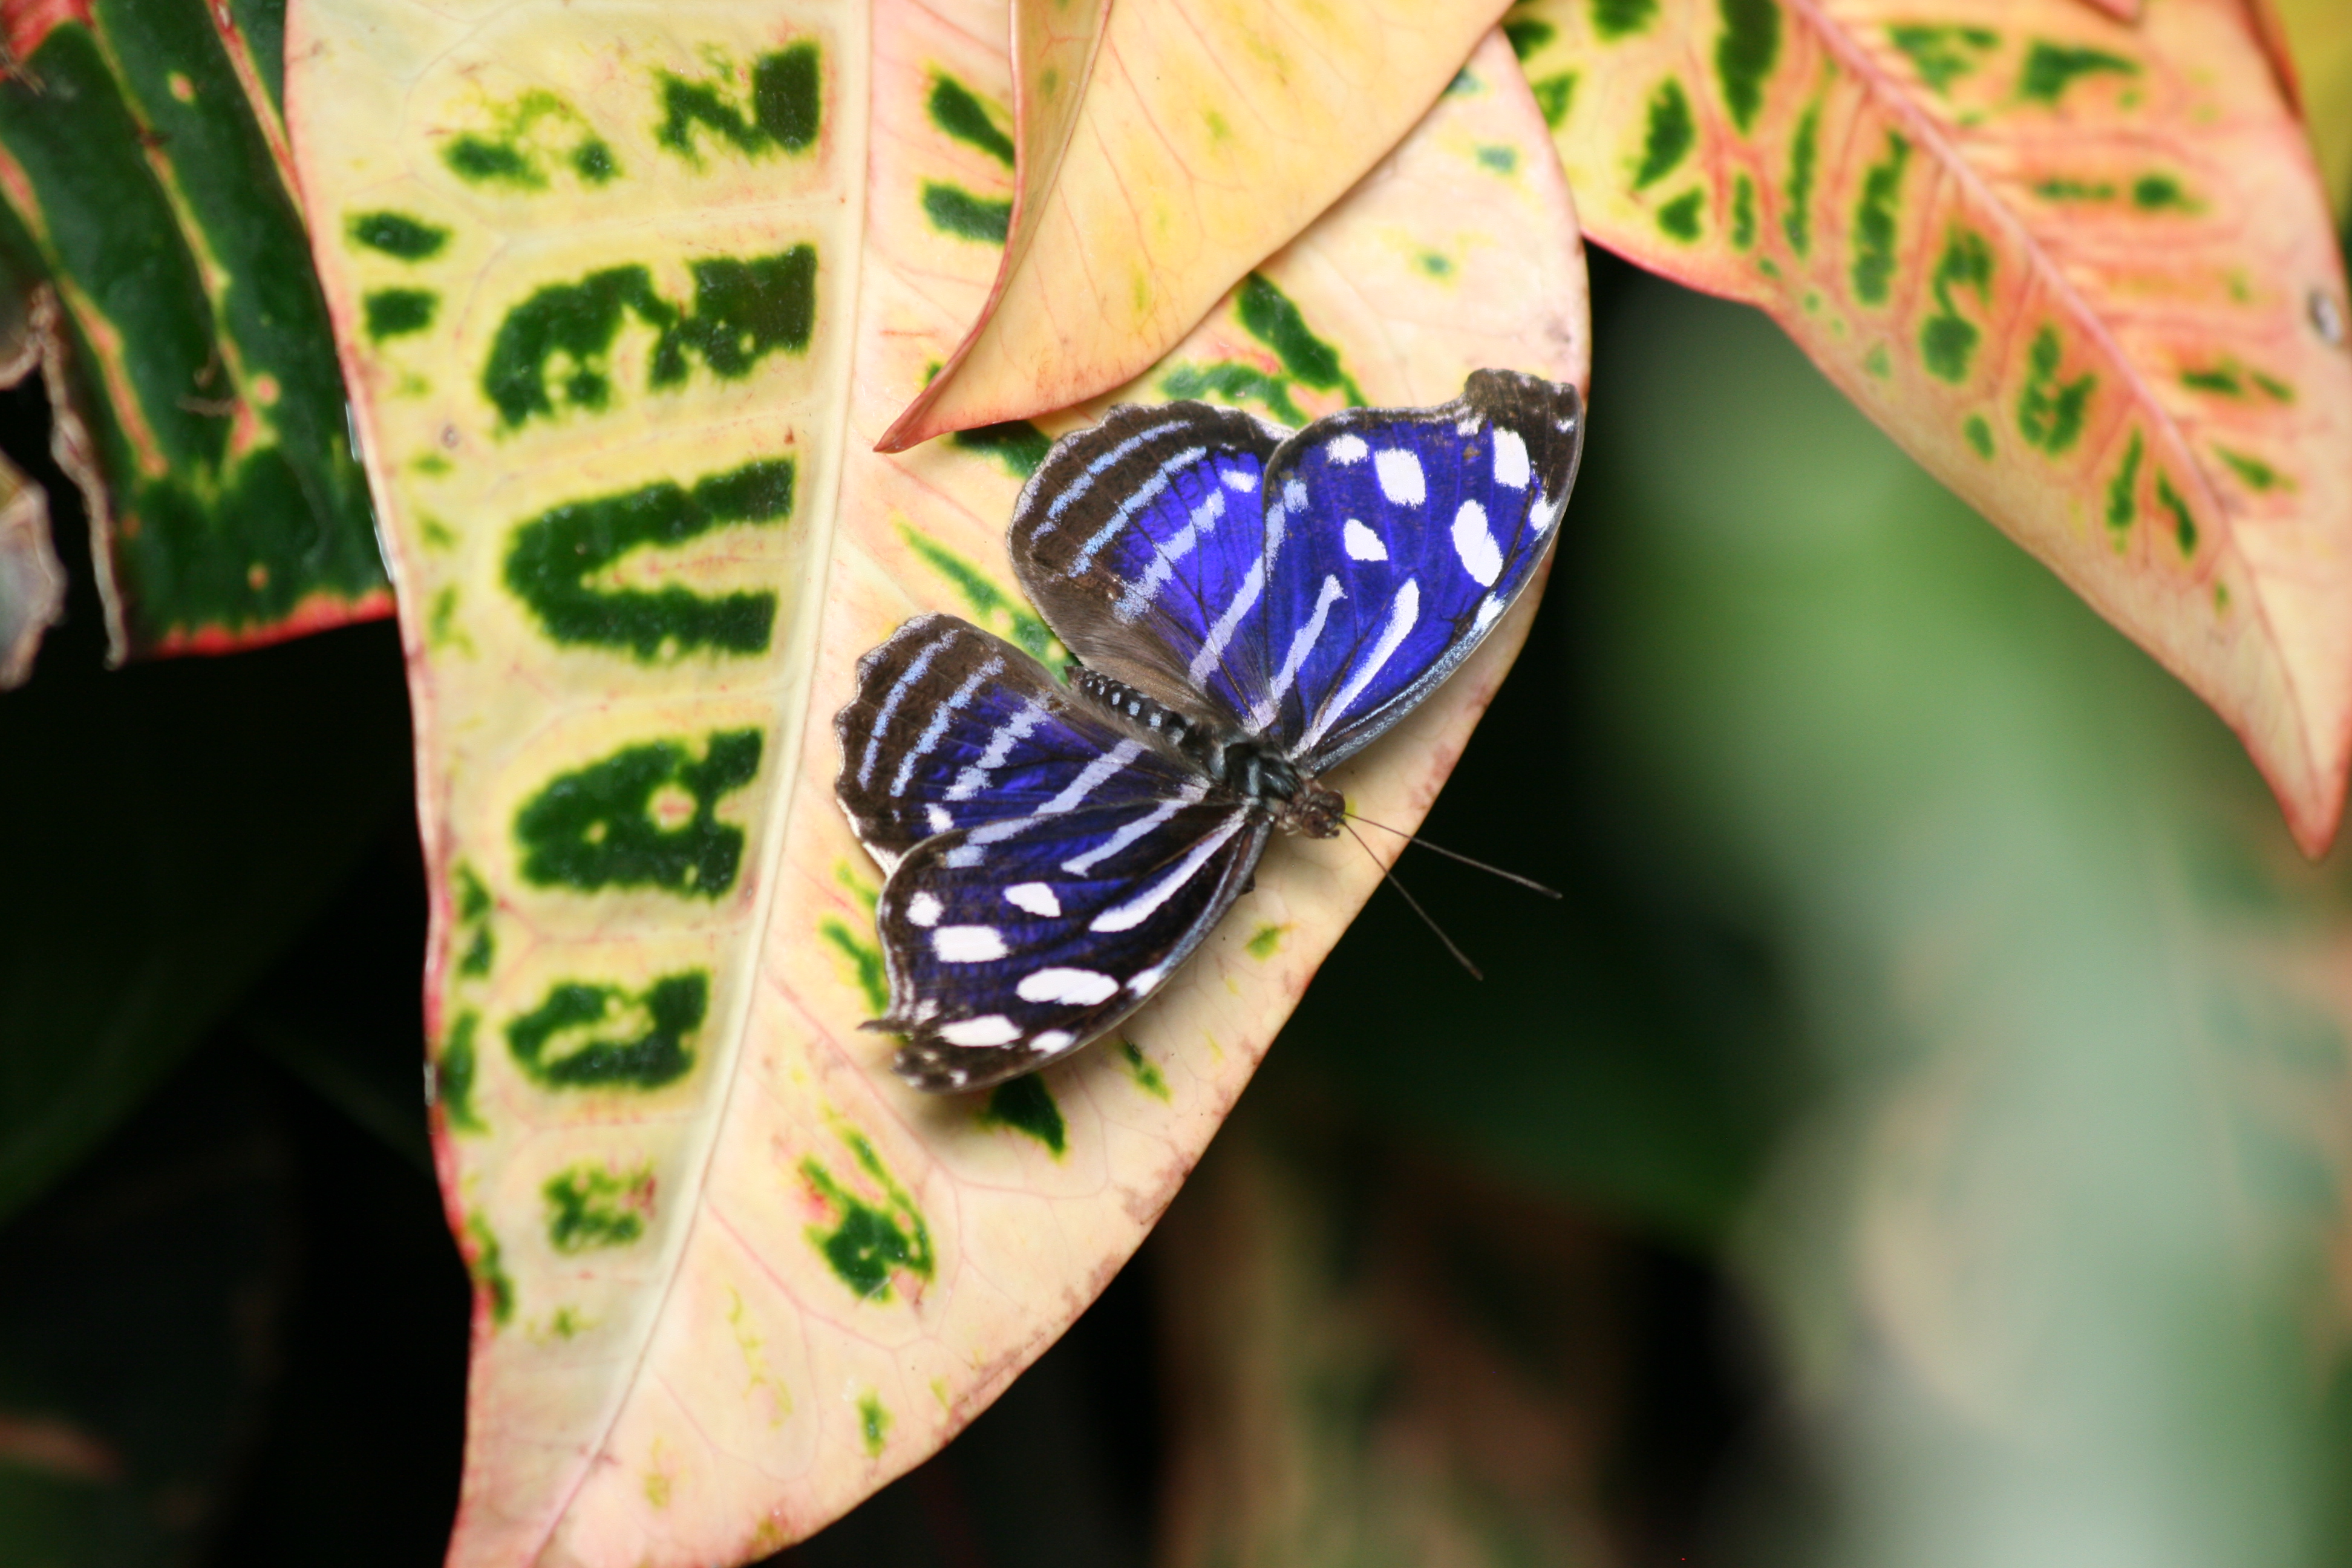 Flirtacious butterfly | Flickr - Photo Sharing!